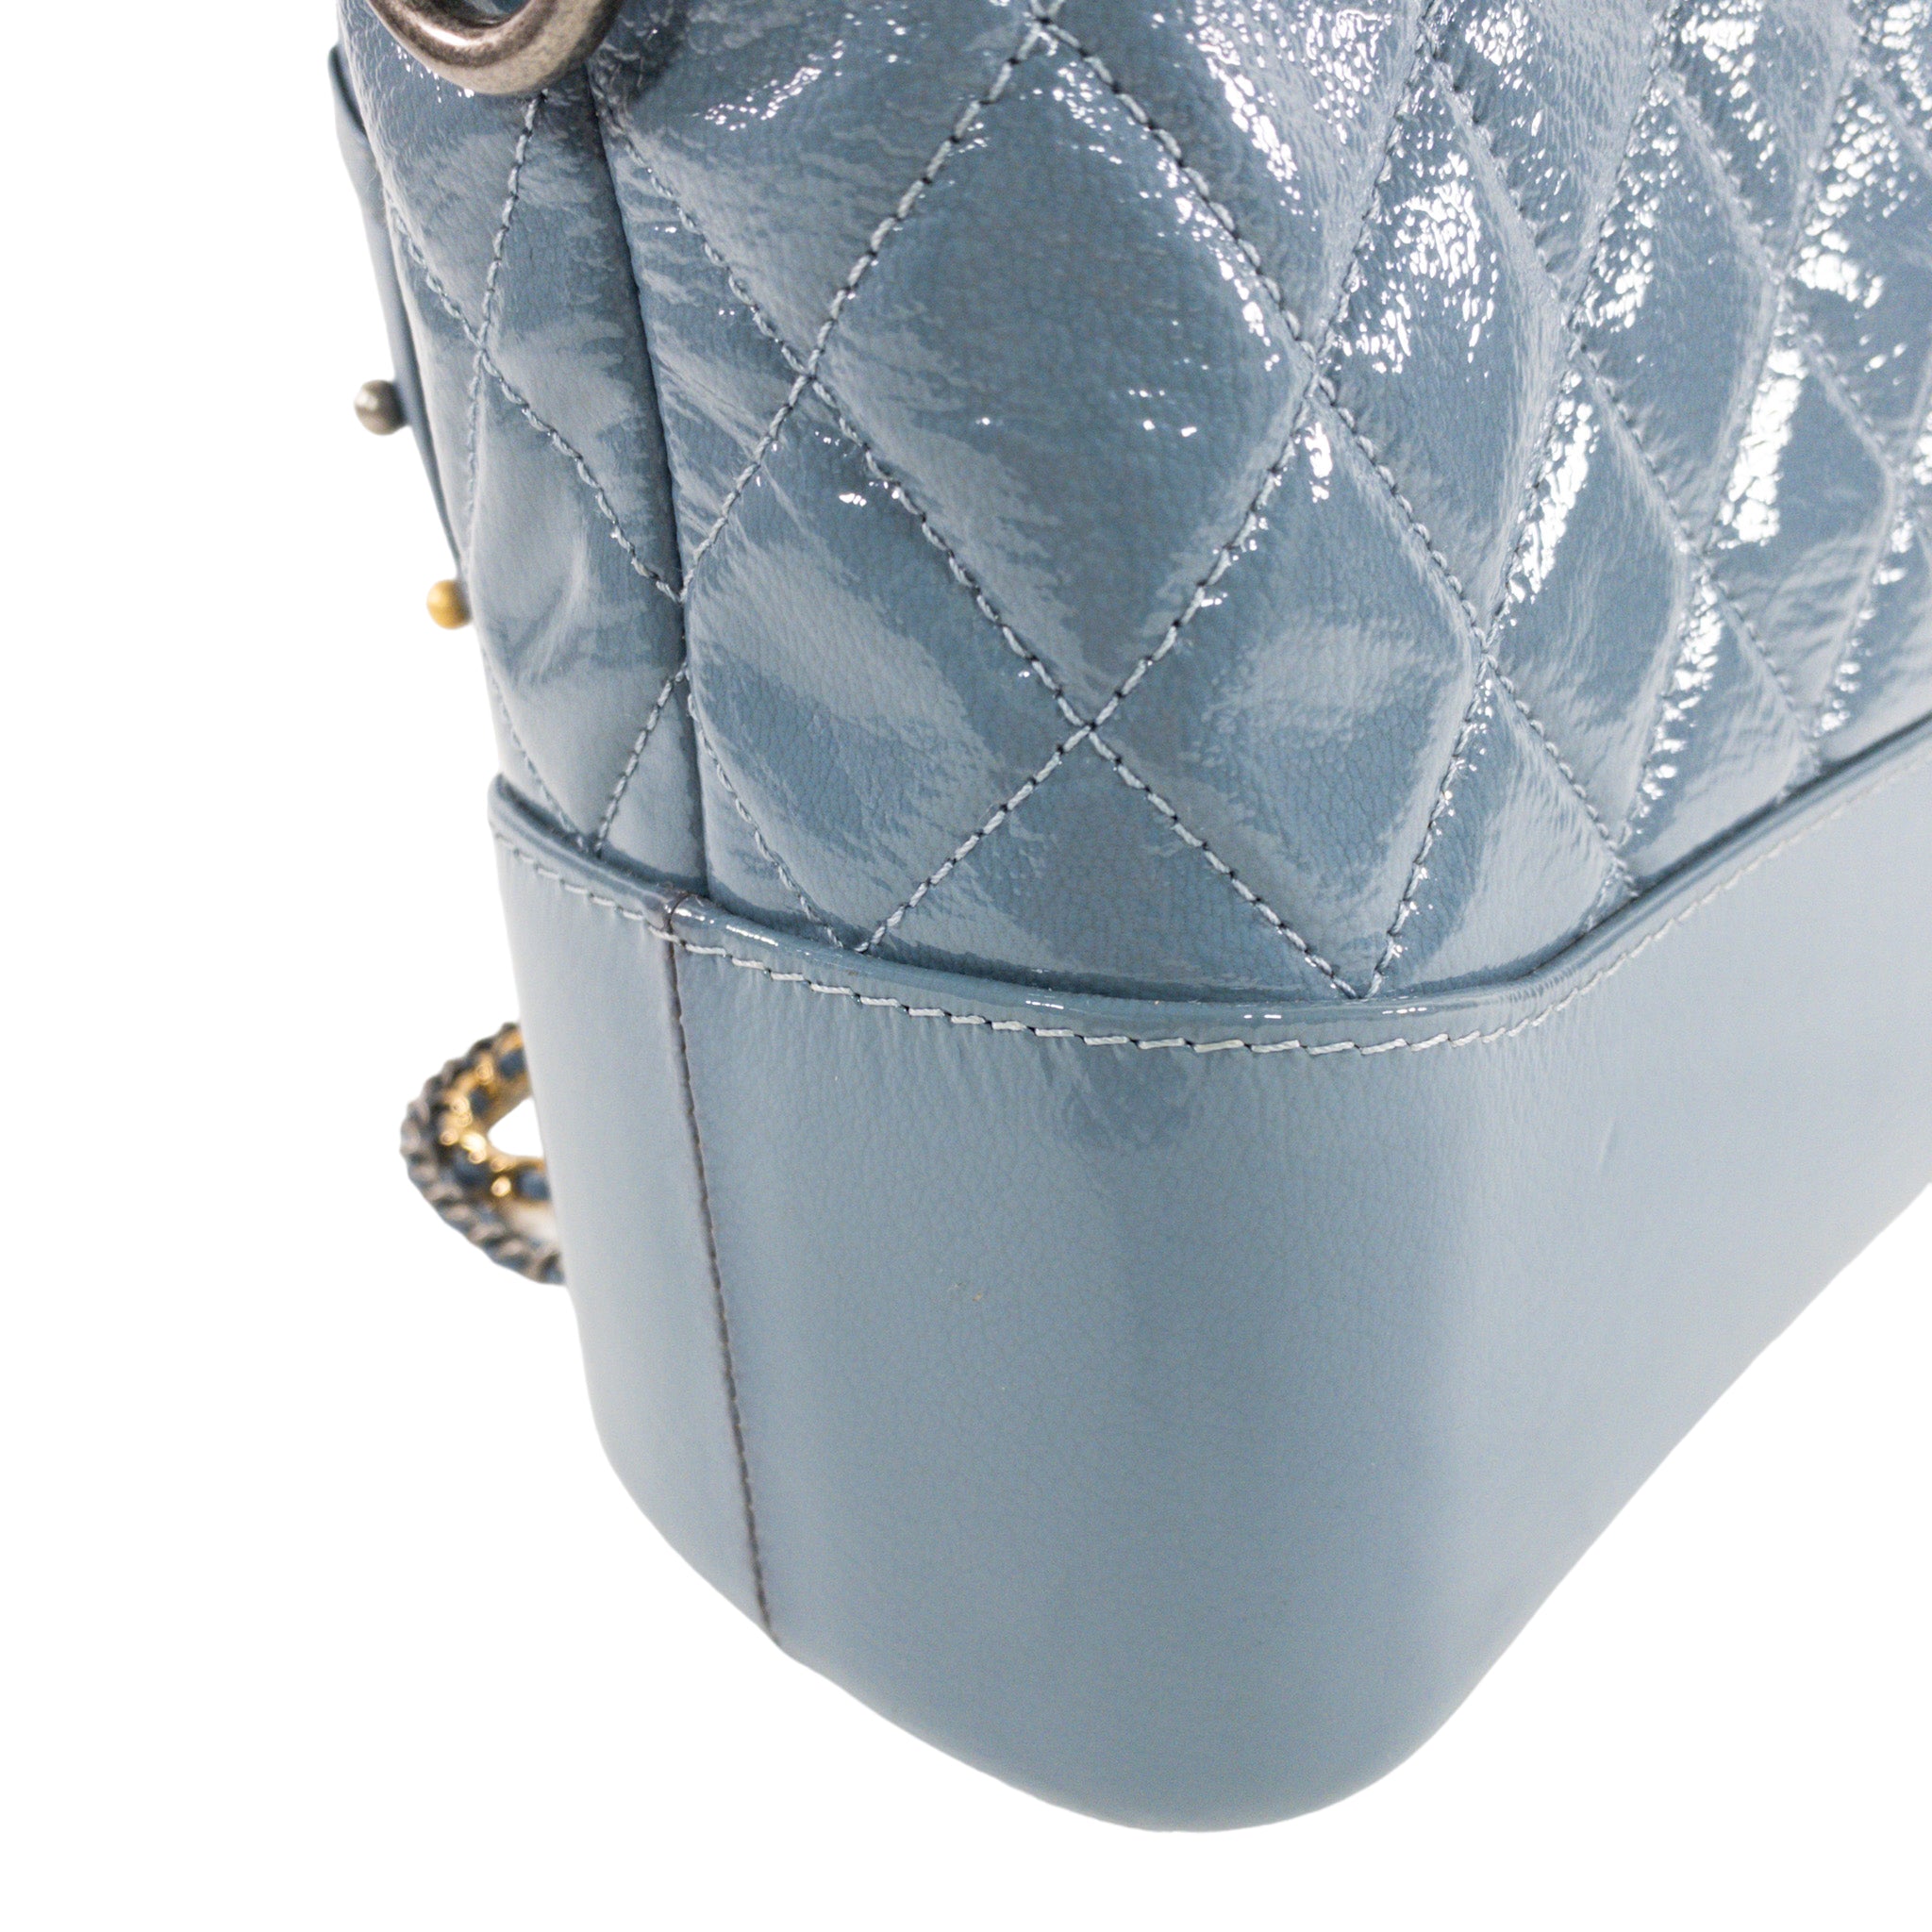 Chanel Gabrielle Hobo Bag Small Dark Blue in Goatskin with Silver